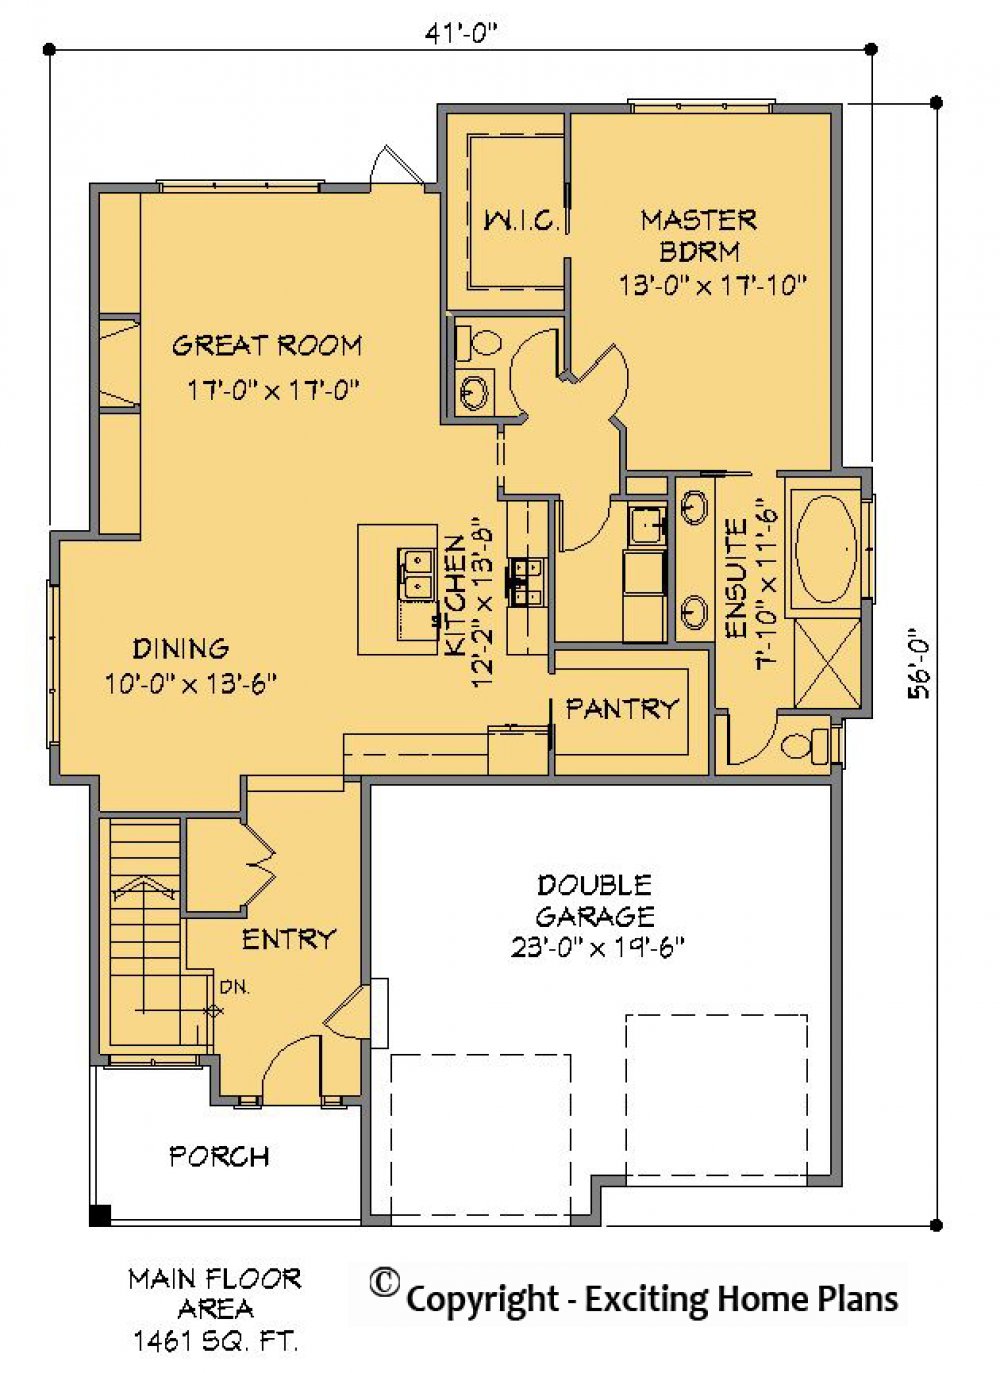 House Plan E1553-10 - Main Floor Plan